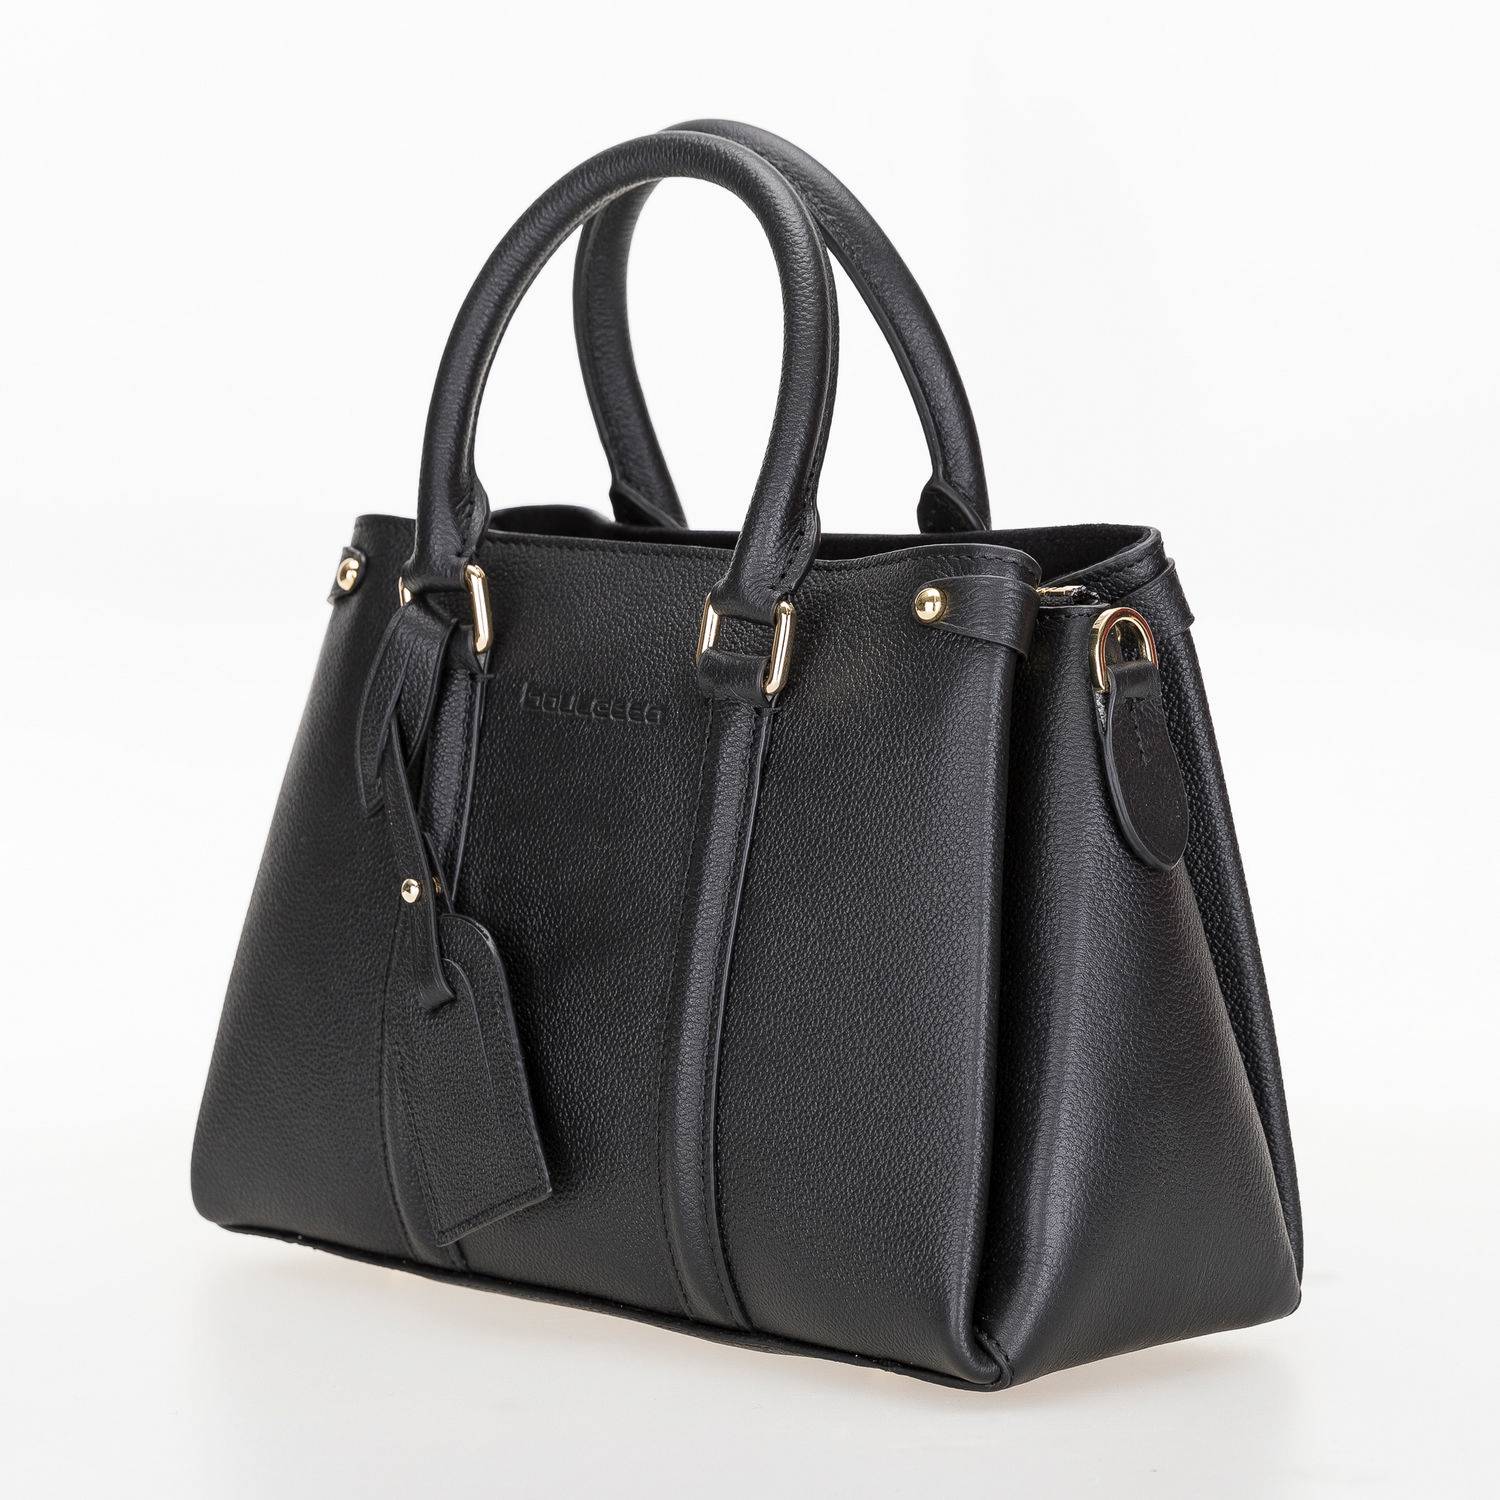 Lara Leather Women's Handbag - Women's Bag - Small Size